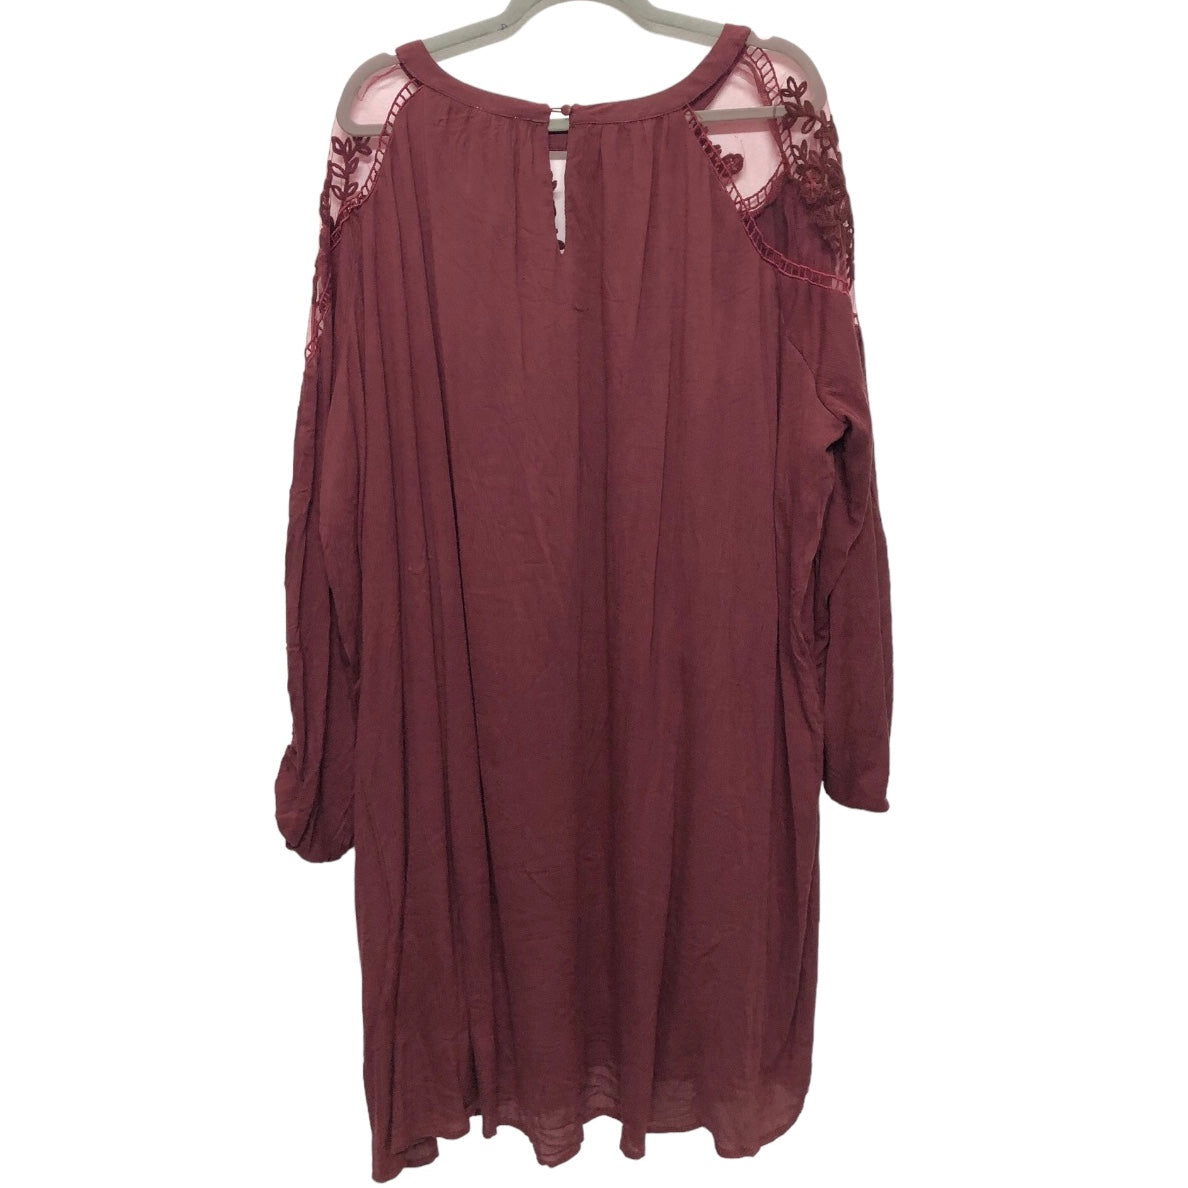 Brown & Purple Dress Casual Short Hayden La, Size 2x